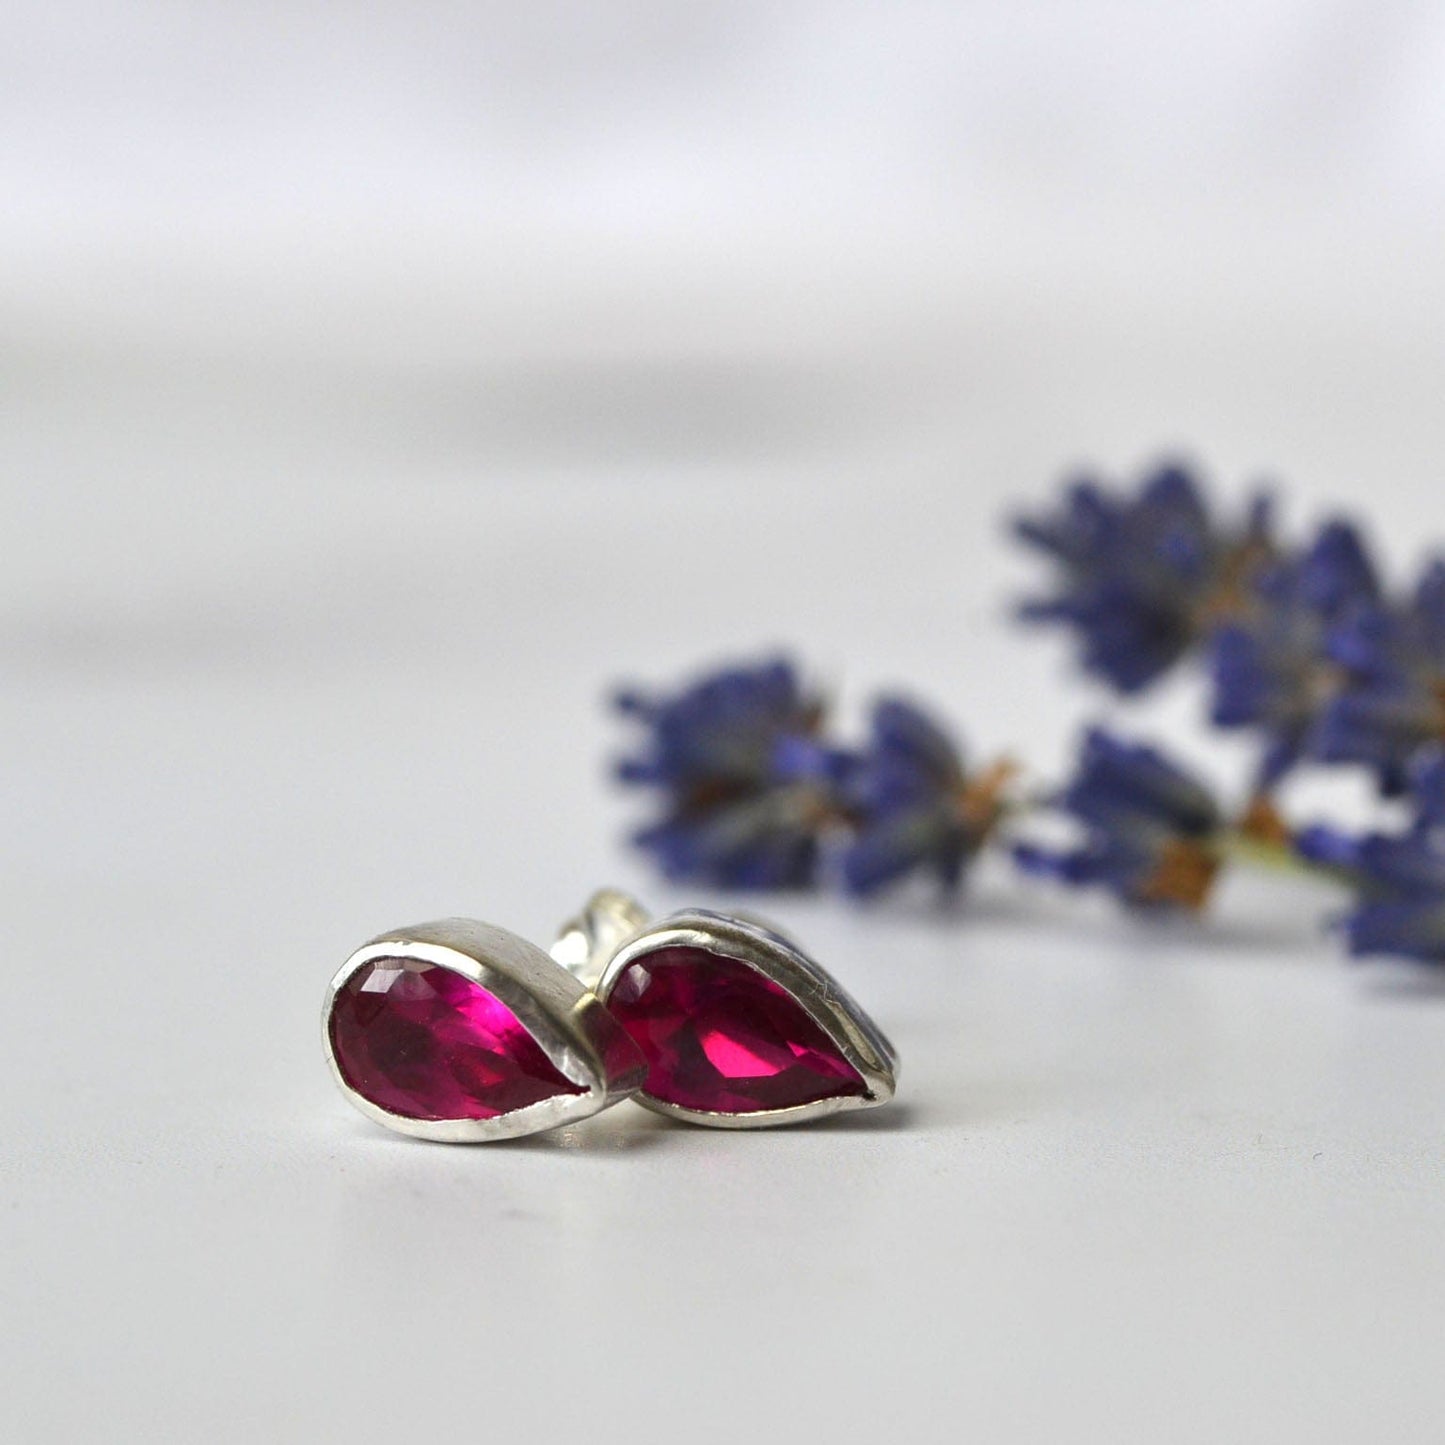 Becky Pearce Designs Earrings 6x4mm / July - Ruby (synth) Pear, or drop shaped gemstone stud earrings